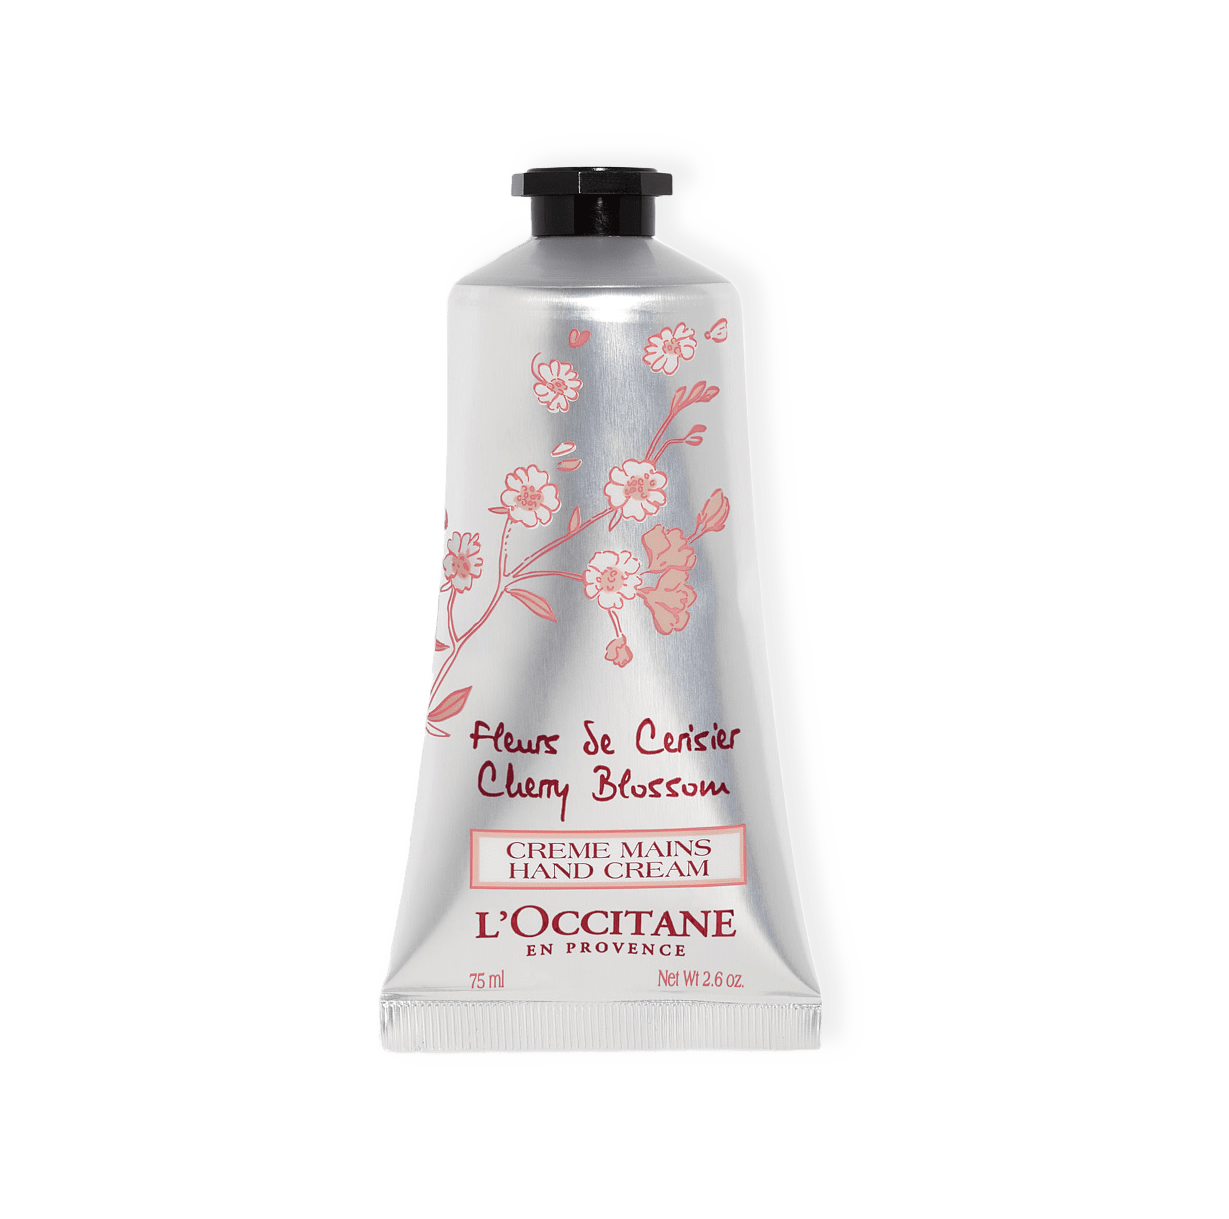 Cherry Blossom Hand Cream från L'Occitane